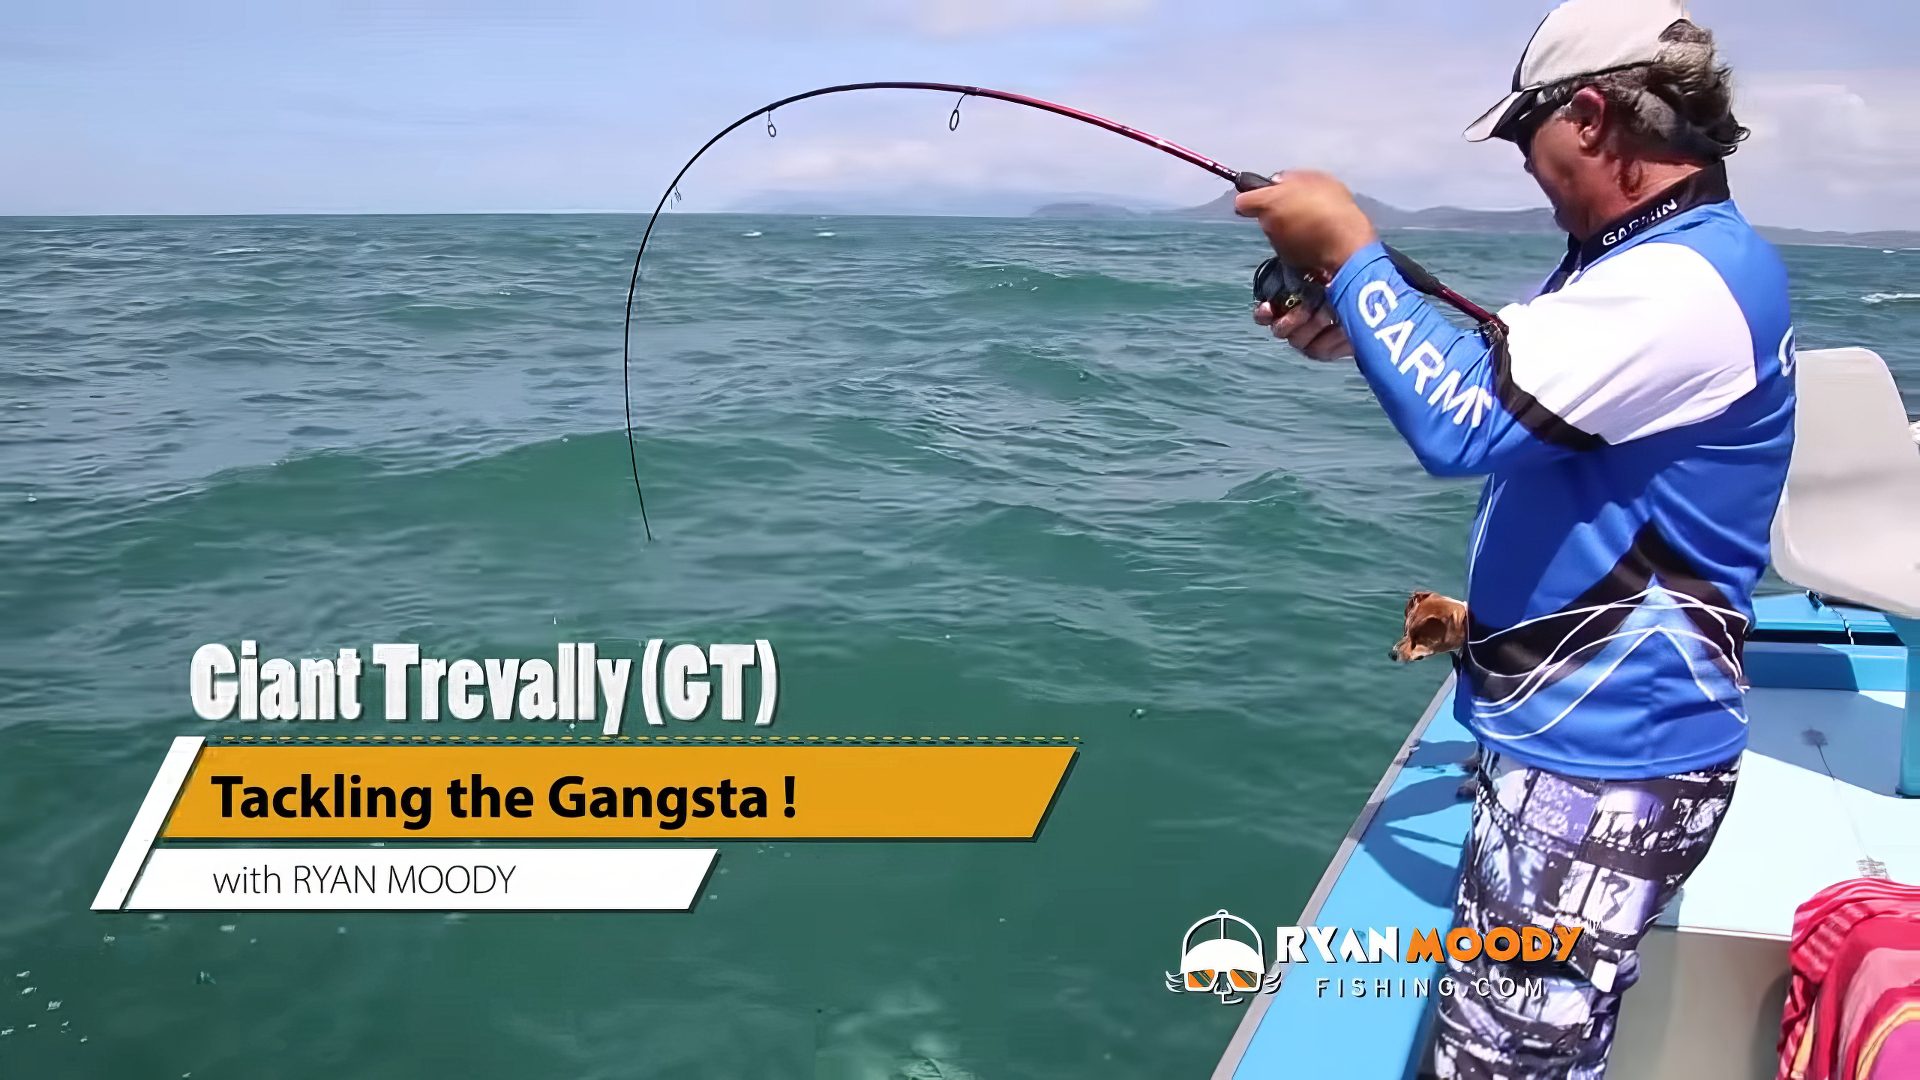 https://www.ryanmoodyfishing.com/wp-content/uploads/2017/02/Catching-Giant-Trevally-GT-fishing-upscaled.jpeg